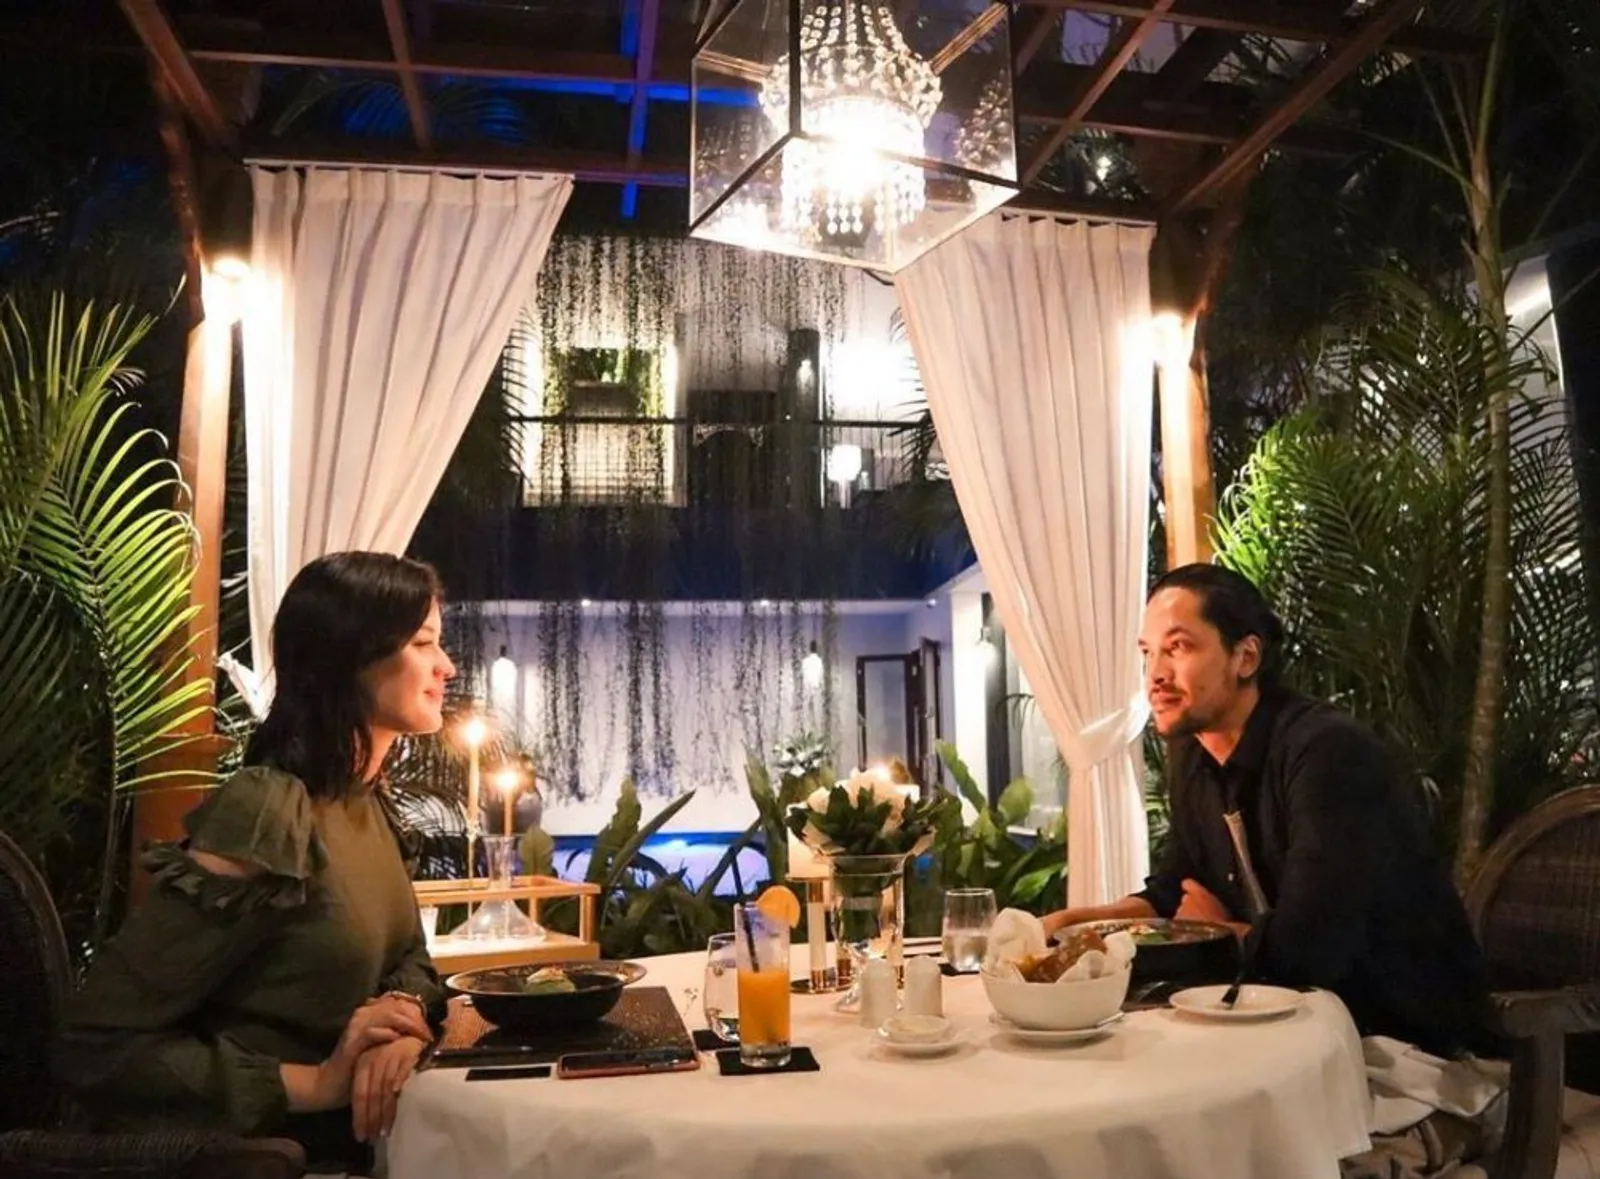 Bikin Baper! 10 Momen Artis Saat Makan Malam Romantis Bareng Pasangan